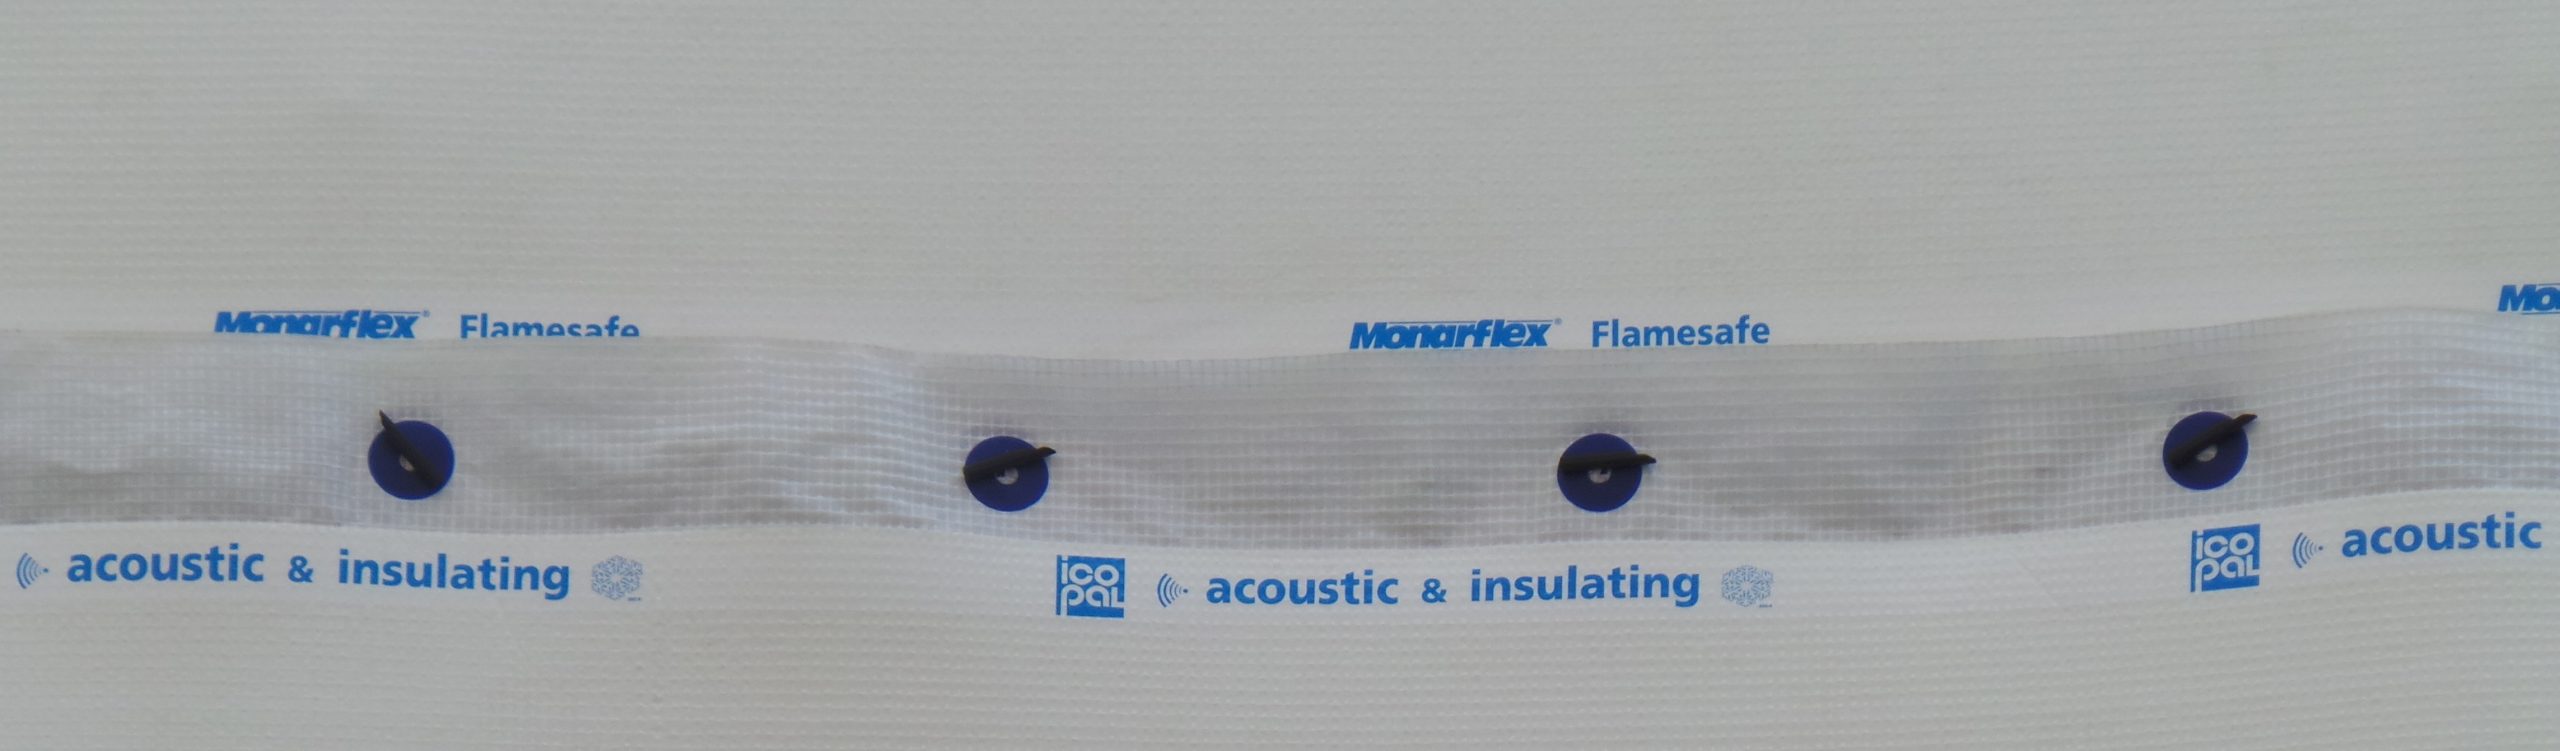 Monarsound Acoustic Insulating Sheeting